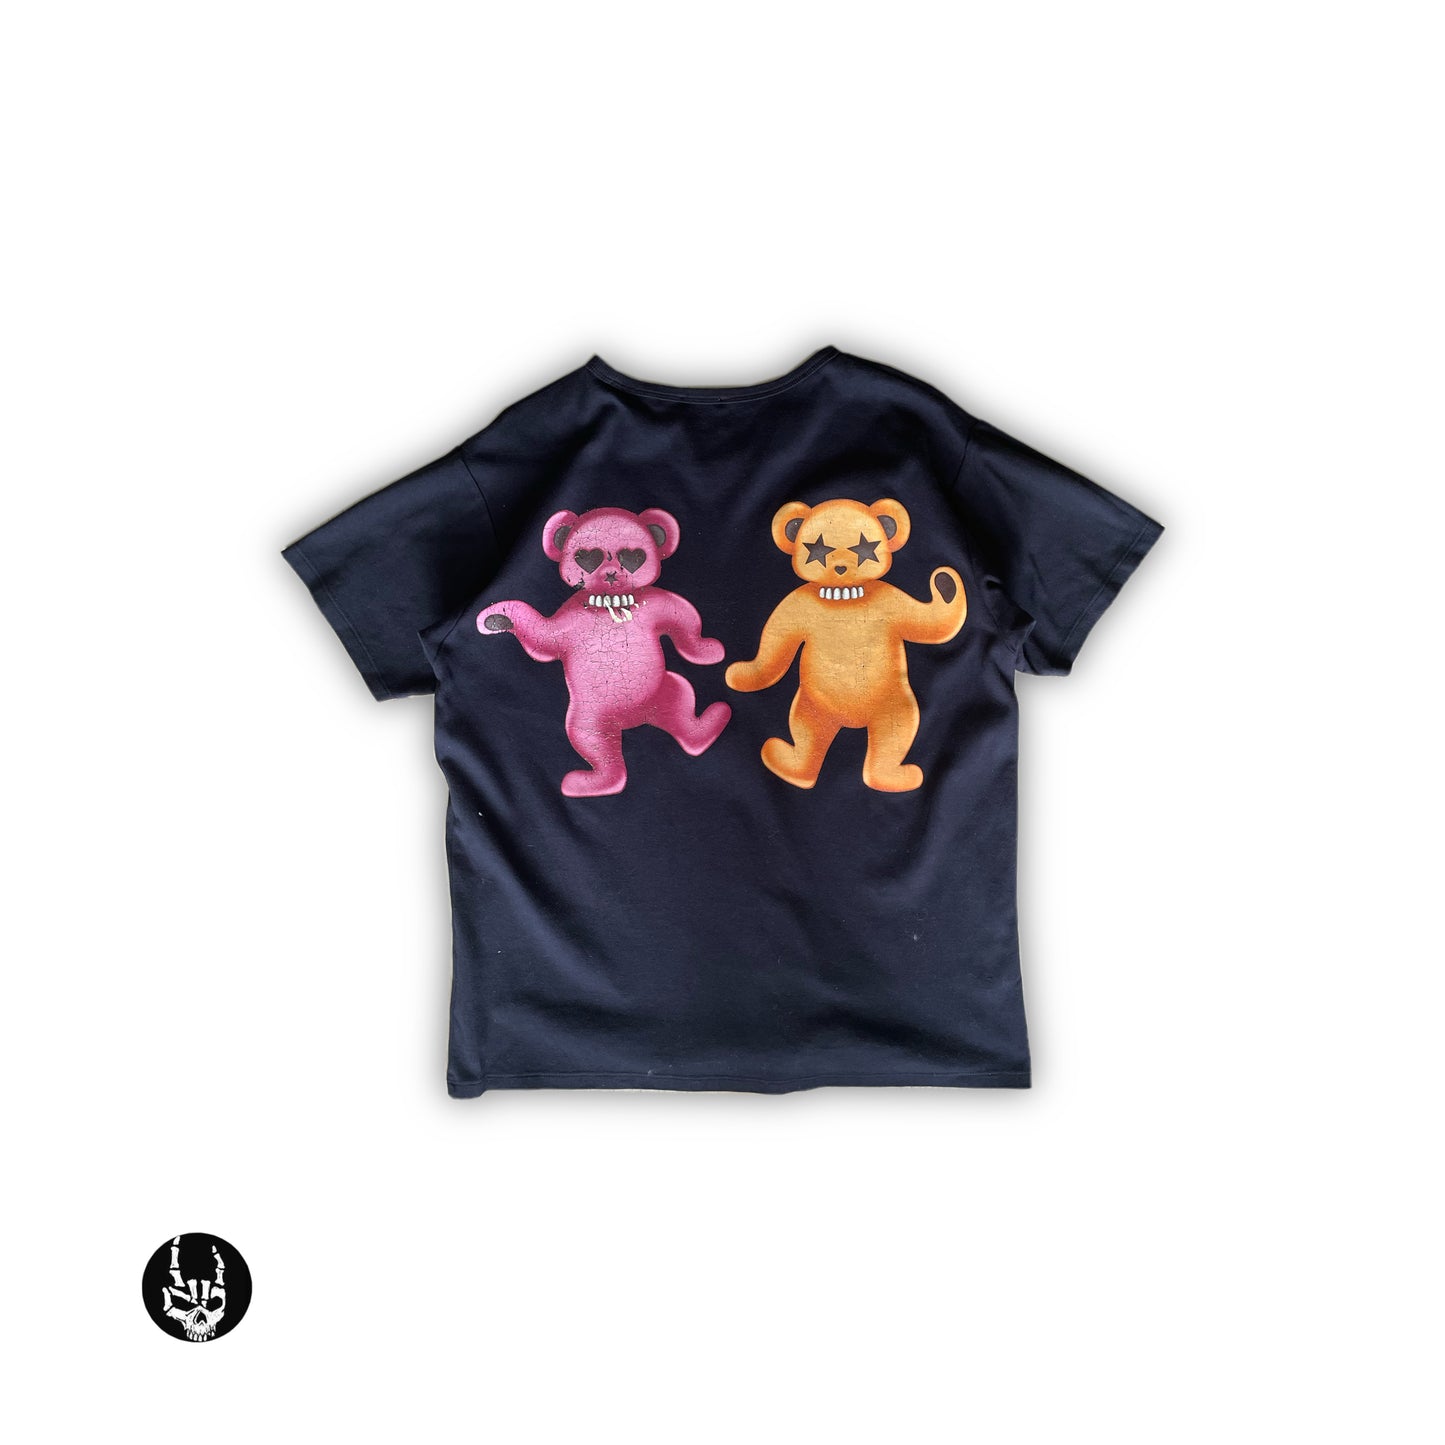 Acne Studios Niagara Bear SS17 T-shirt